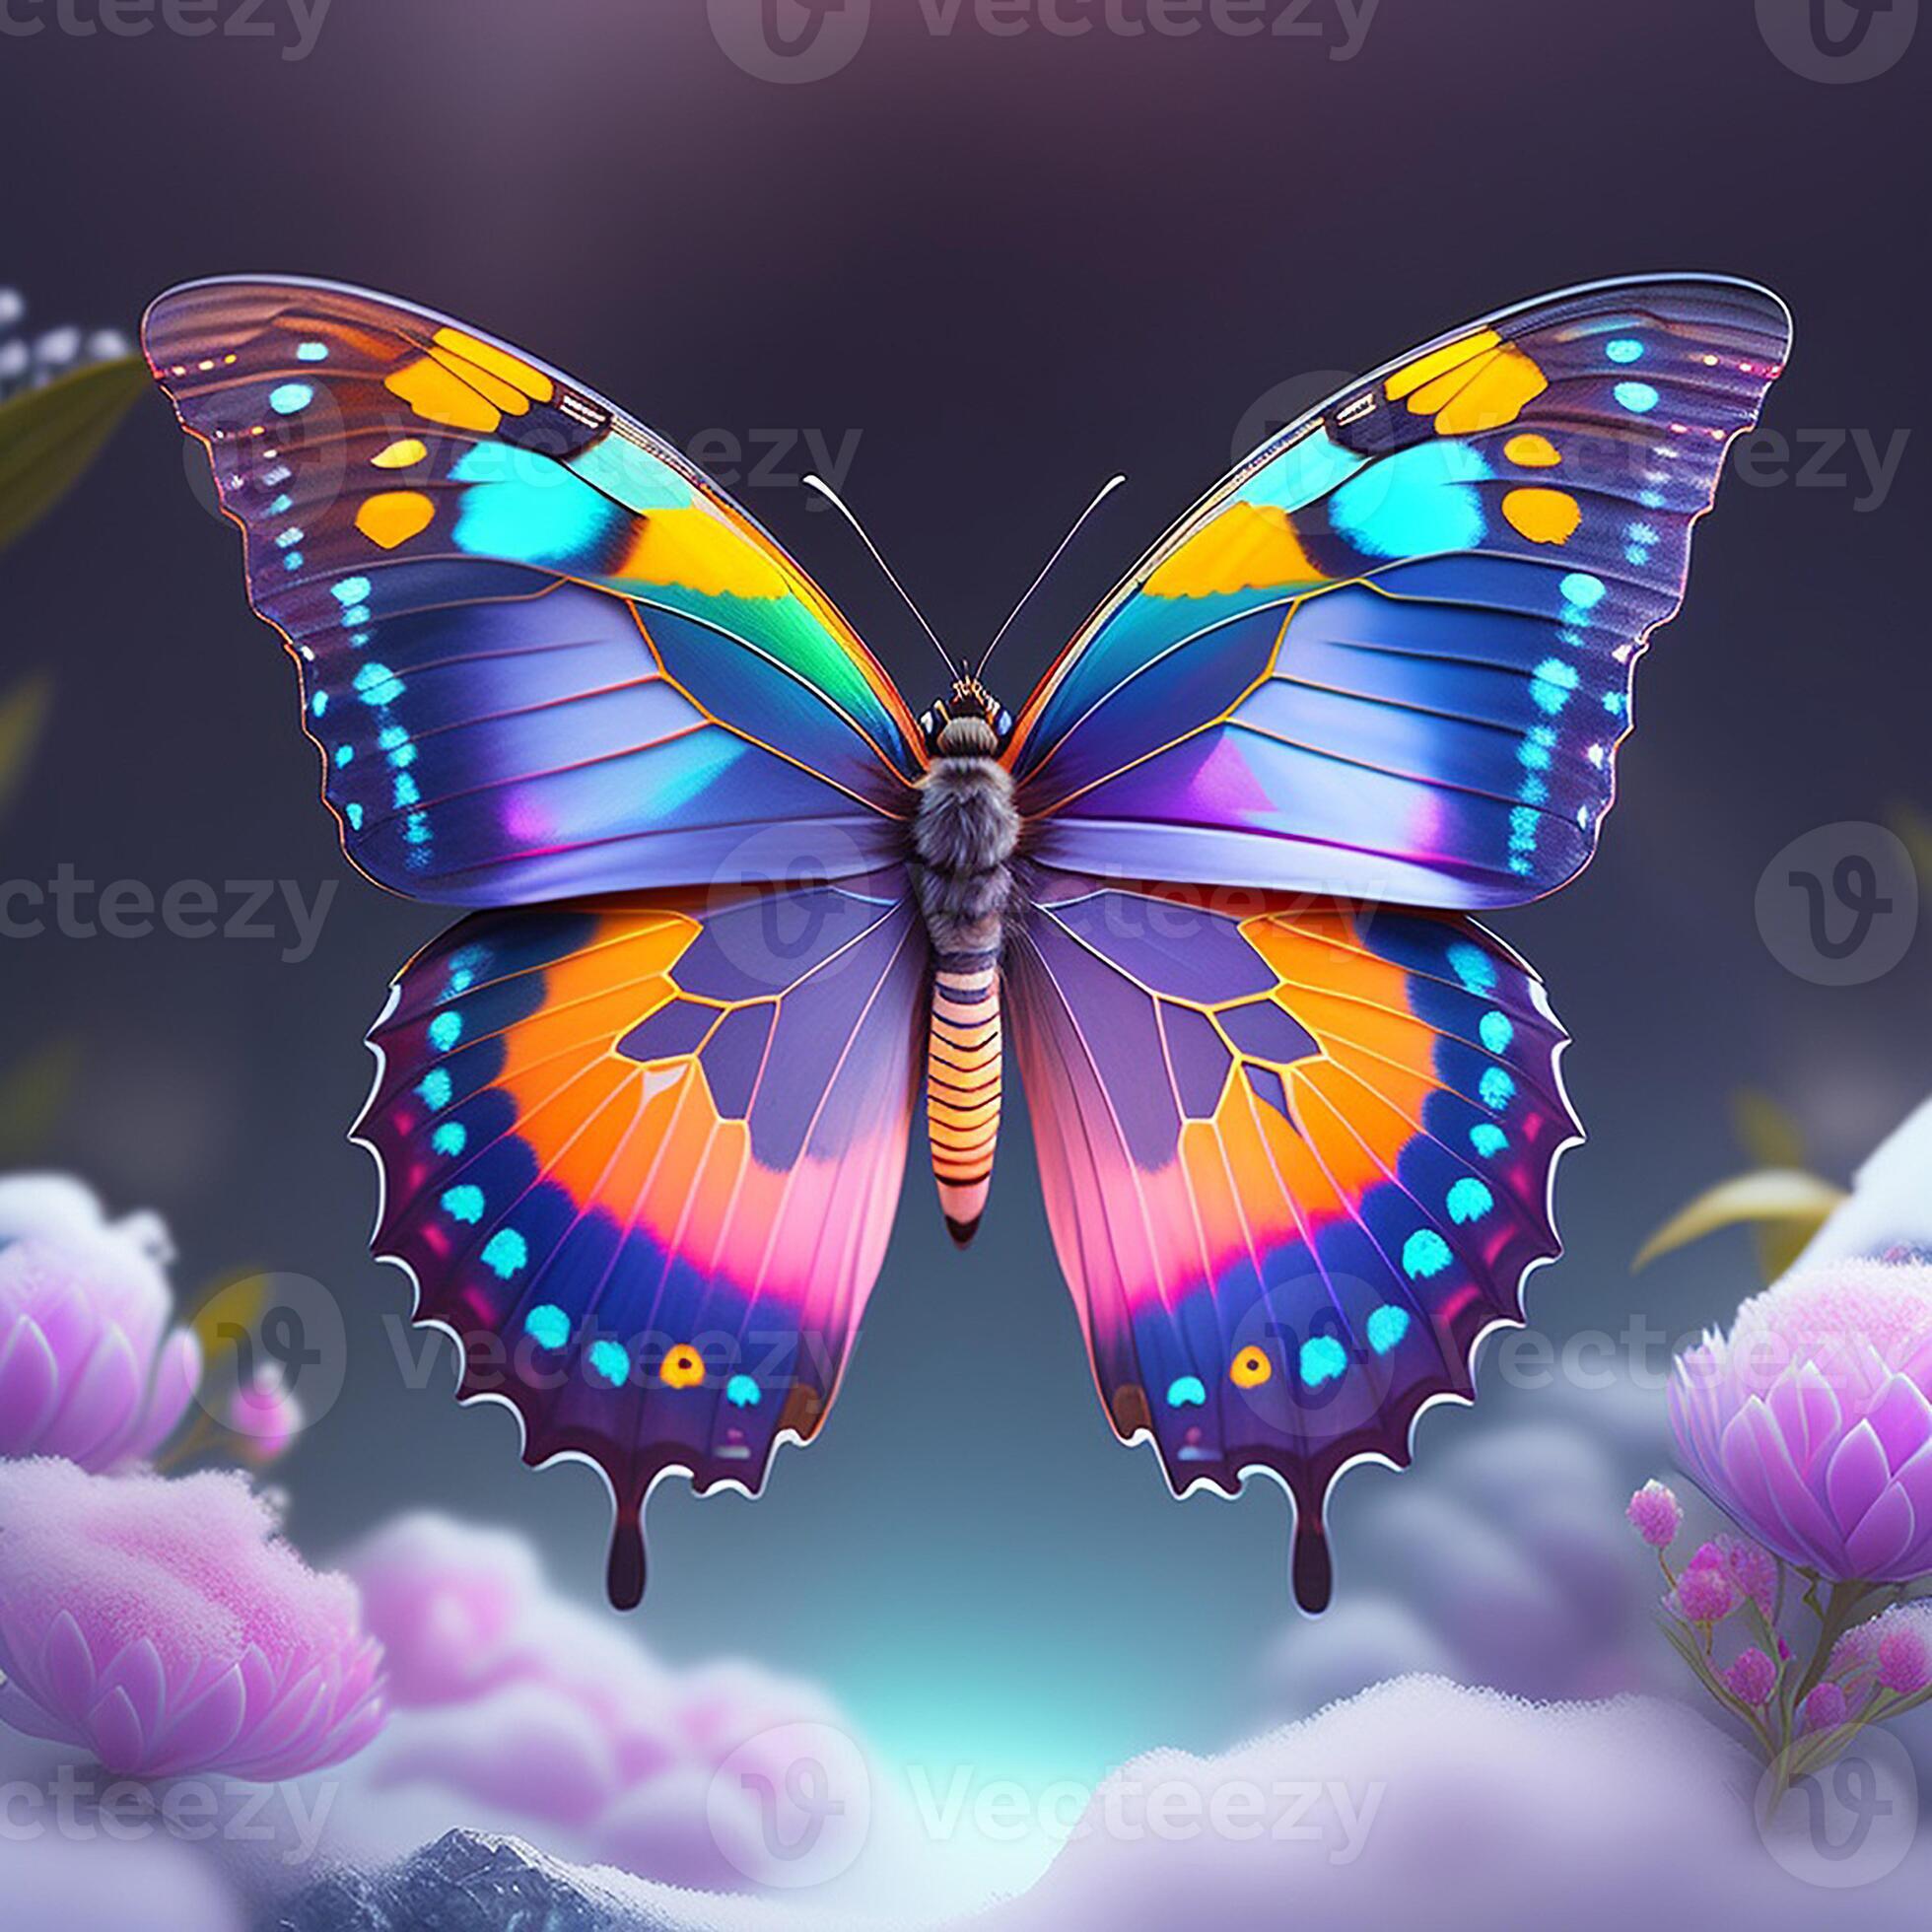 3D Butterflies UNBELIEVABLE Techniques!! So Satisfying 🤤